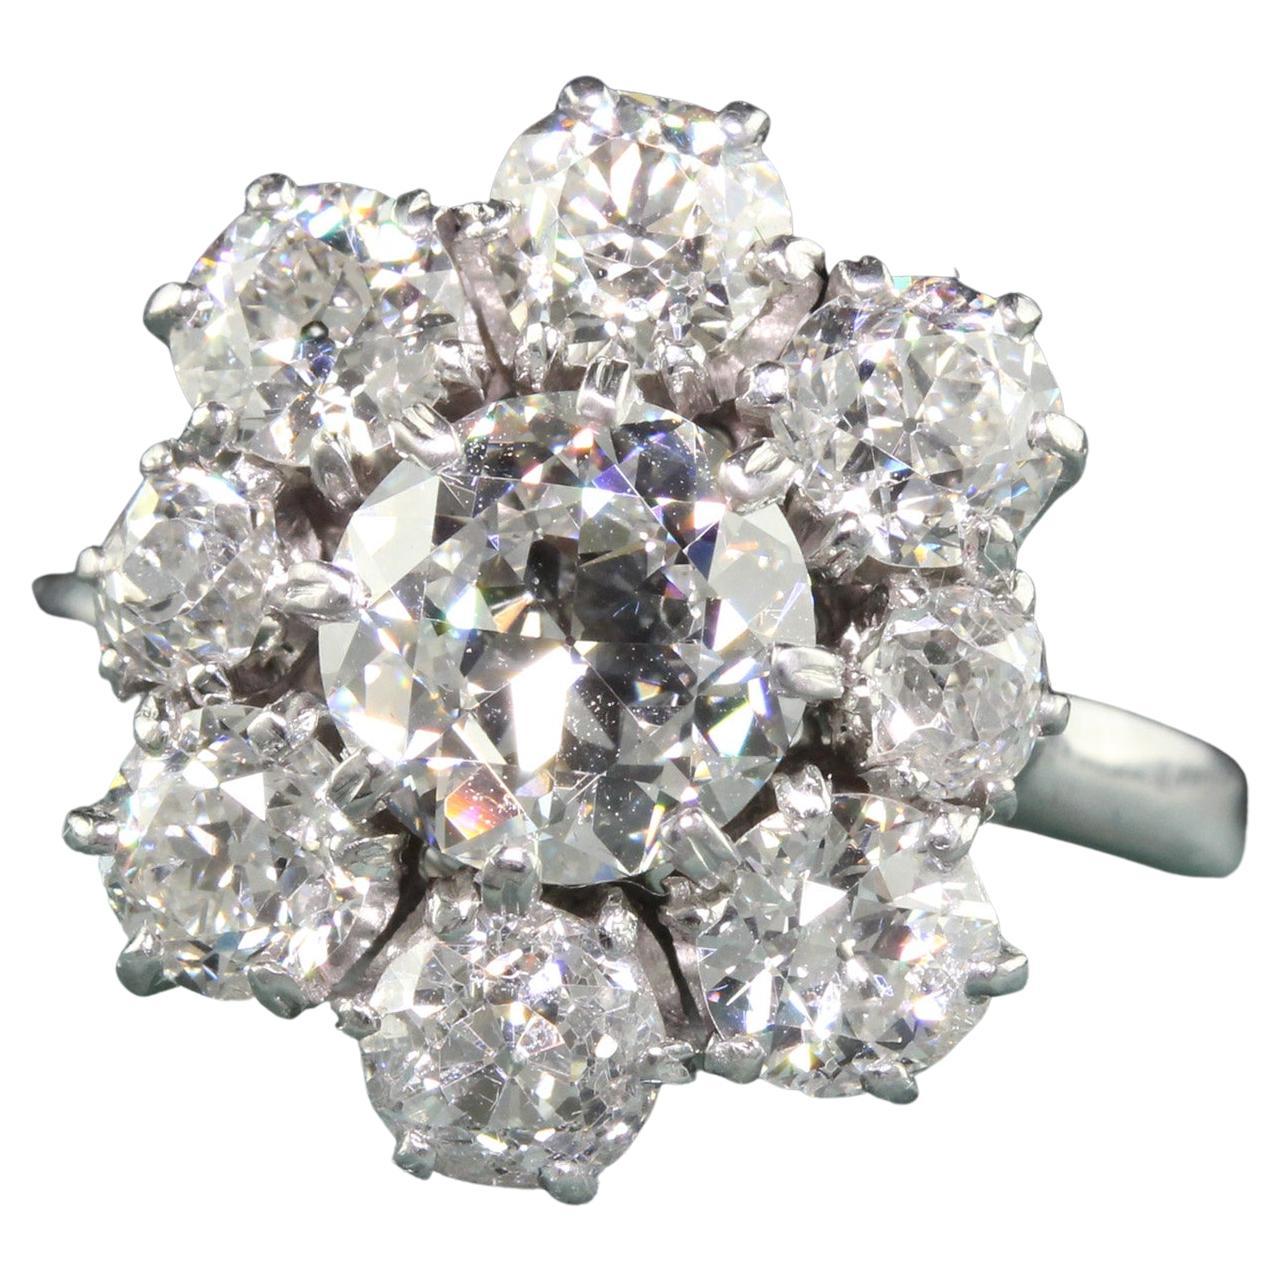 Vintage Estate French 18k White Gold Old Cut Diamond Engagement Ring, GIA